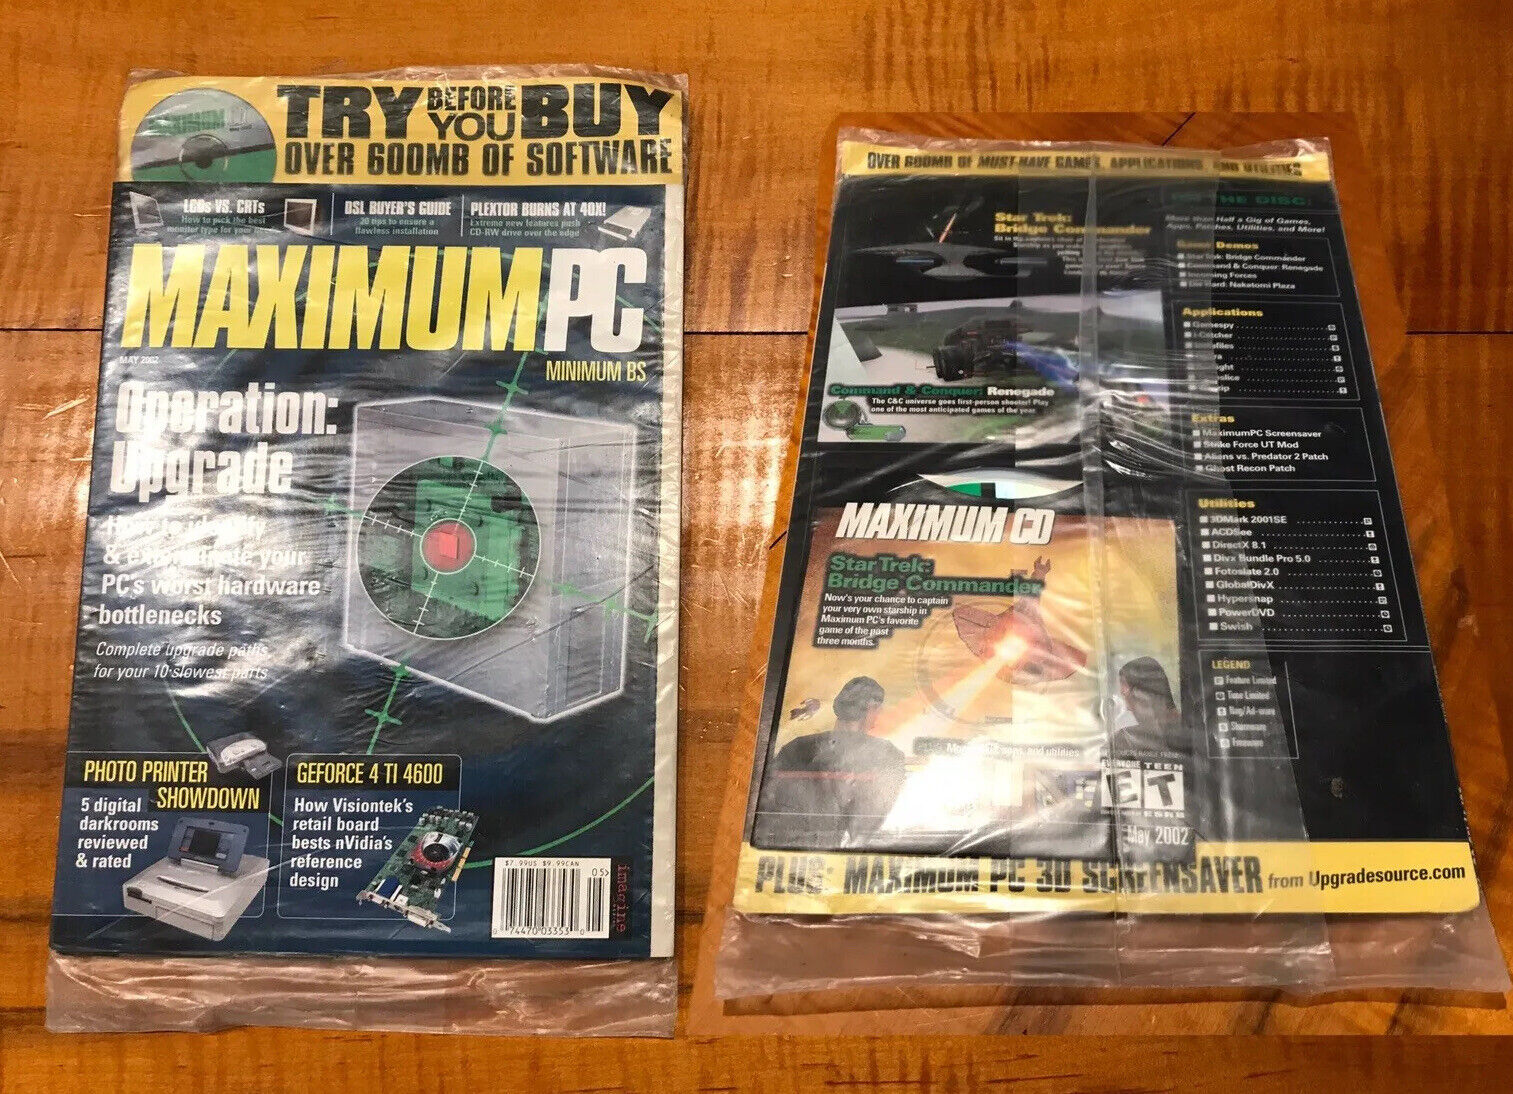 New Sealed STAR TREK COMMANDER GAMING CD MAXIMUM PC Magazine 2002 VINTAGE RARE